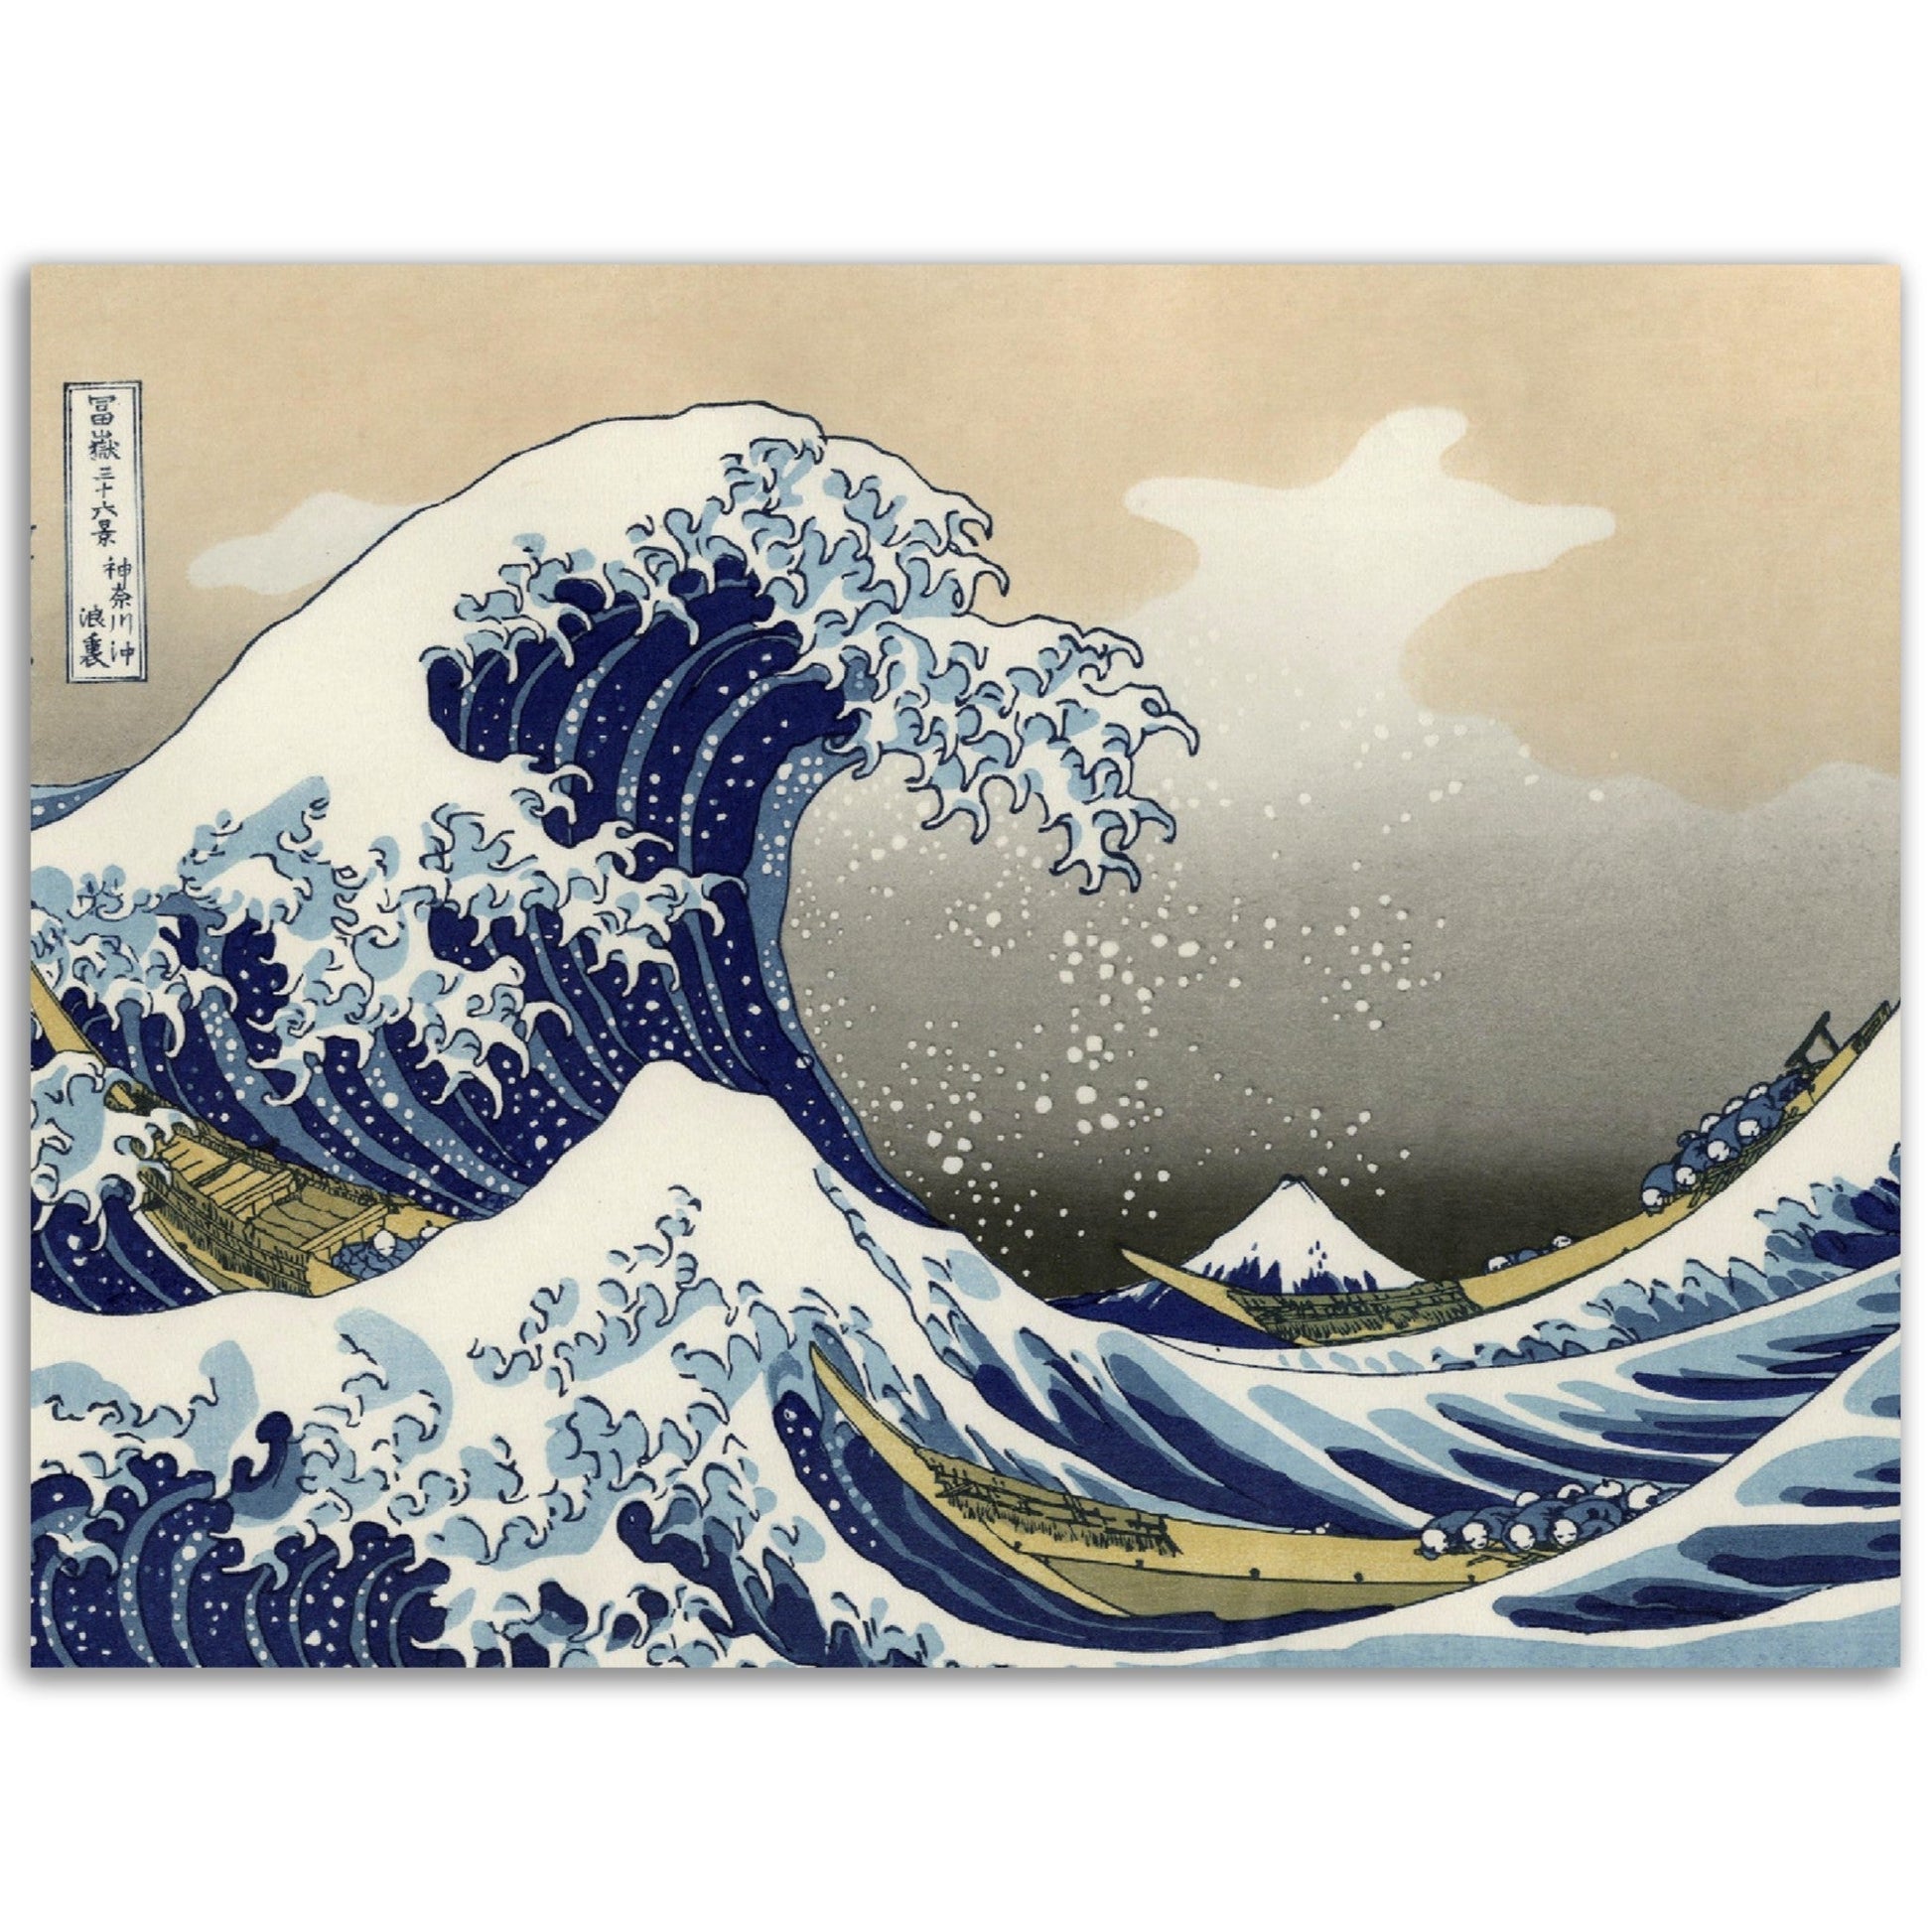 The Great Wave off Kanagawa by Hokusai Print - Print Material - Master's Gaze